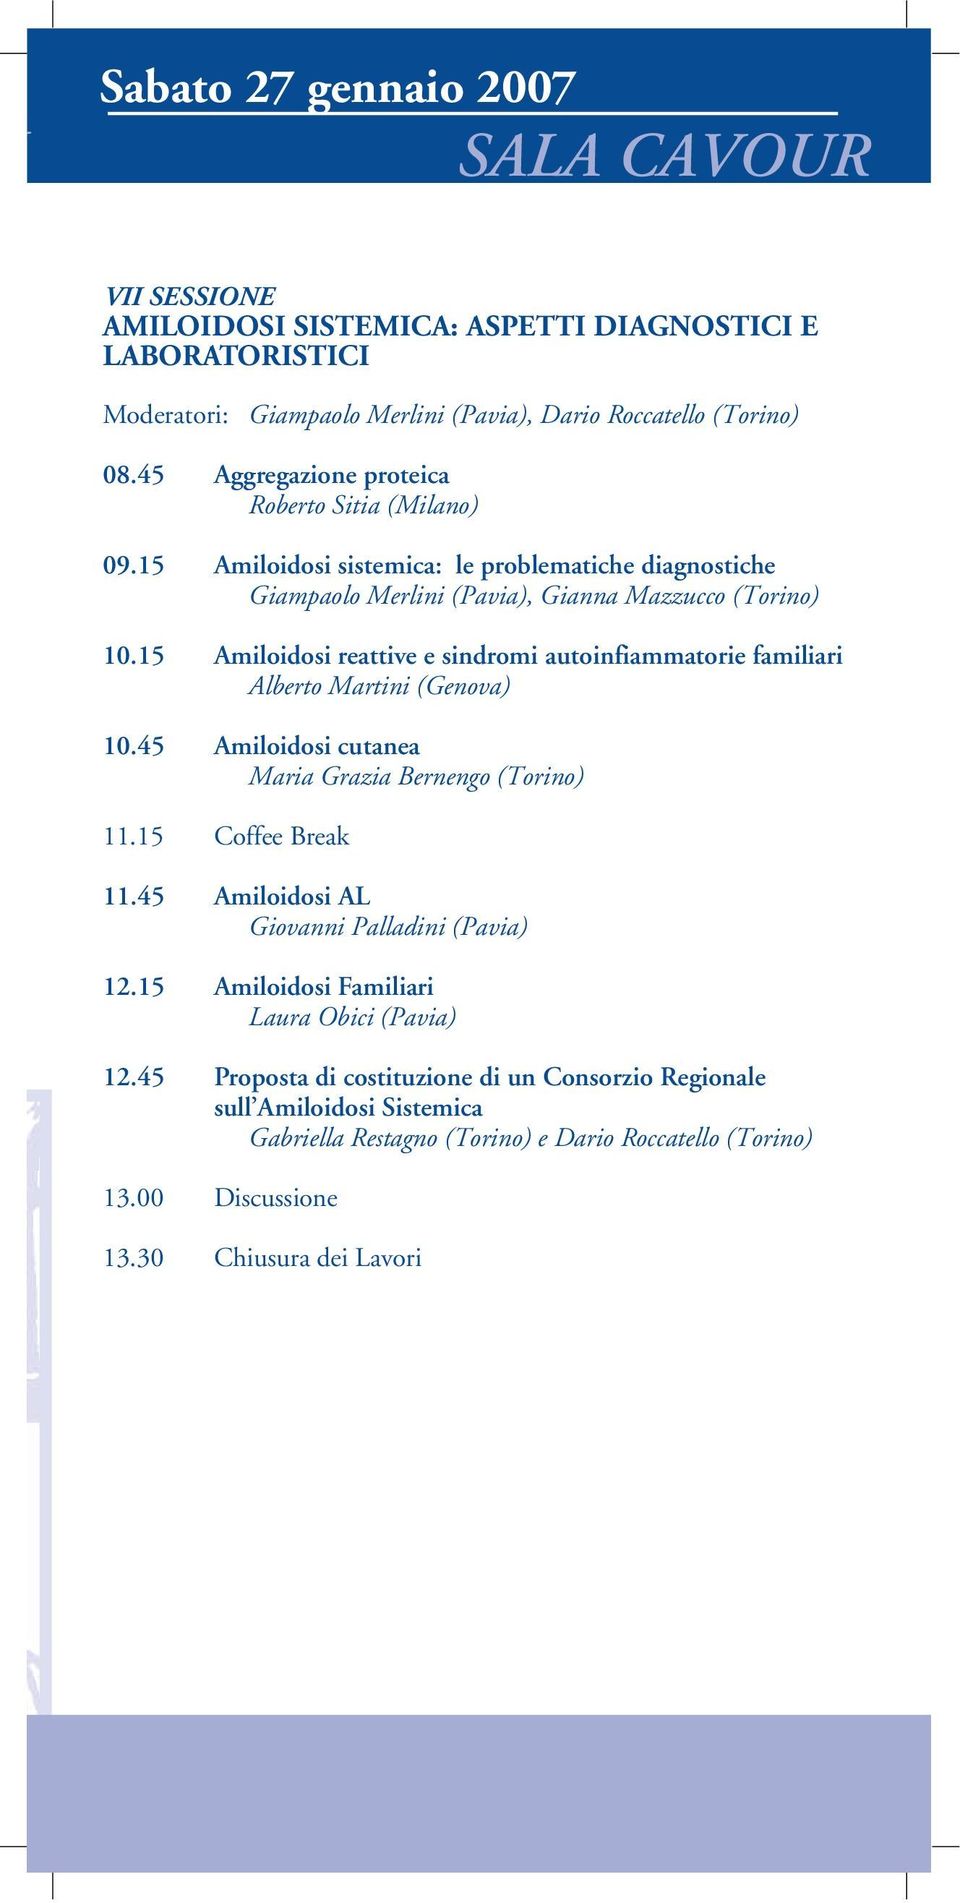 15 Amiloidosi reattive e sindromi autoinfiammatorie familiari Alberto Martini (Genova) 10.45 Amiloidosi cutanea Maria Grazia Bernengo (Torino) 11.15 Coffee Break 11.